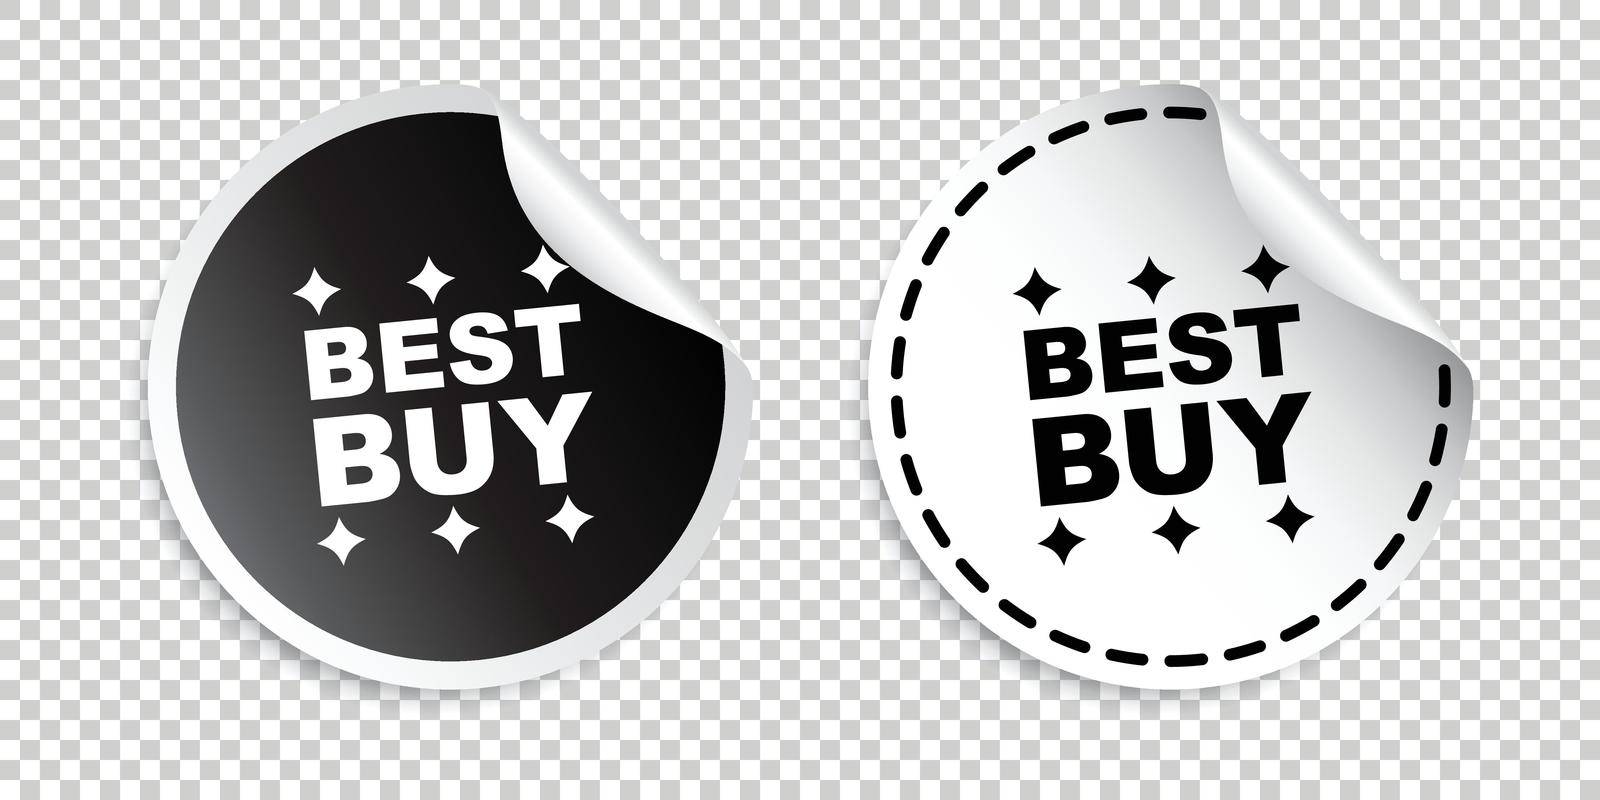 Best buy sticker. Black and white vector illustration.